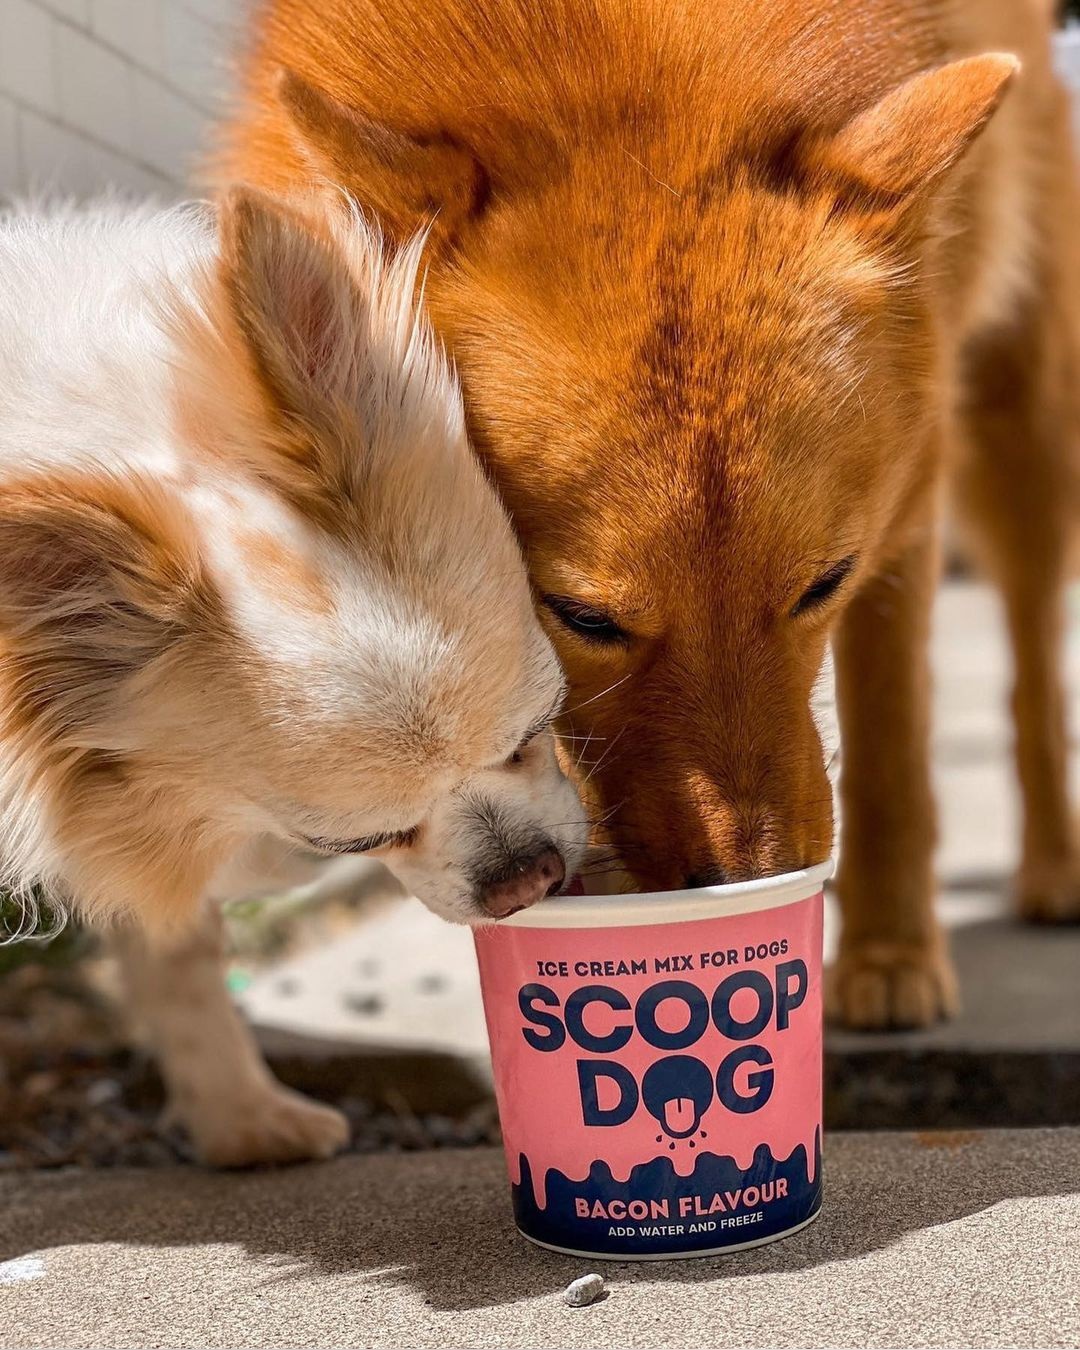 Dogs eating ice cream